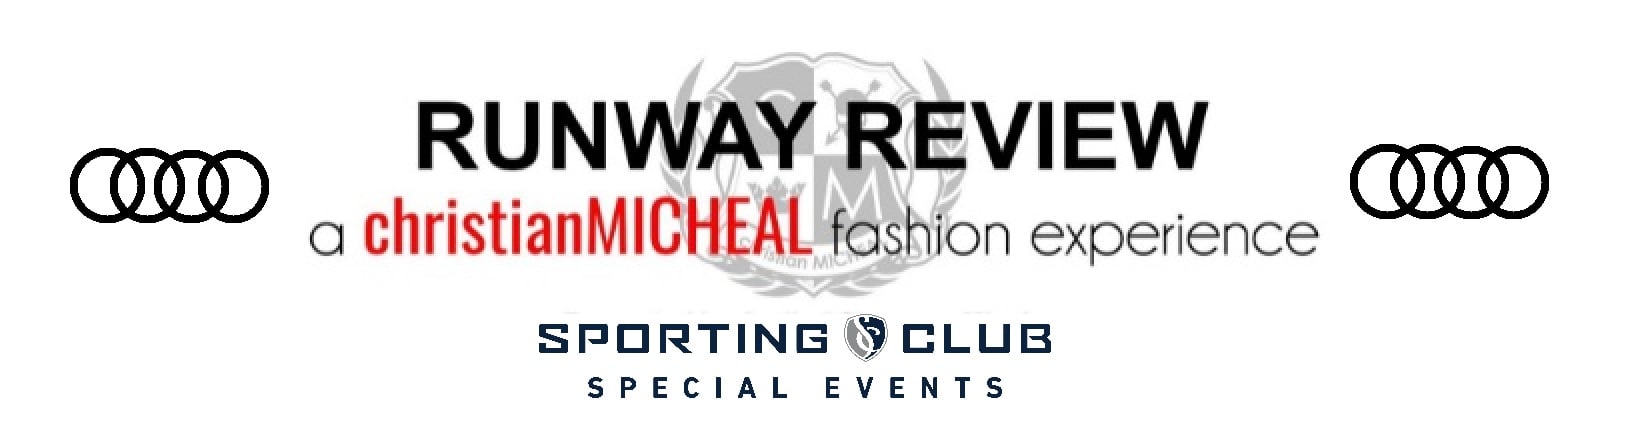 Runway Review KC | Show